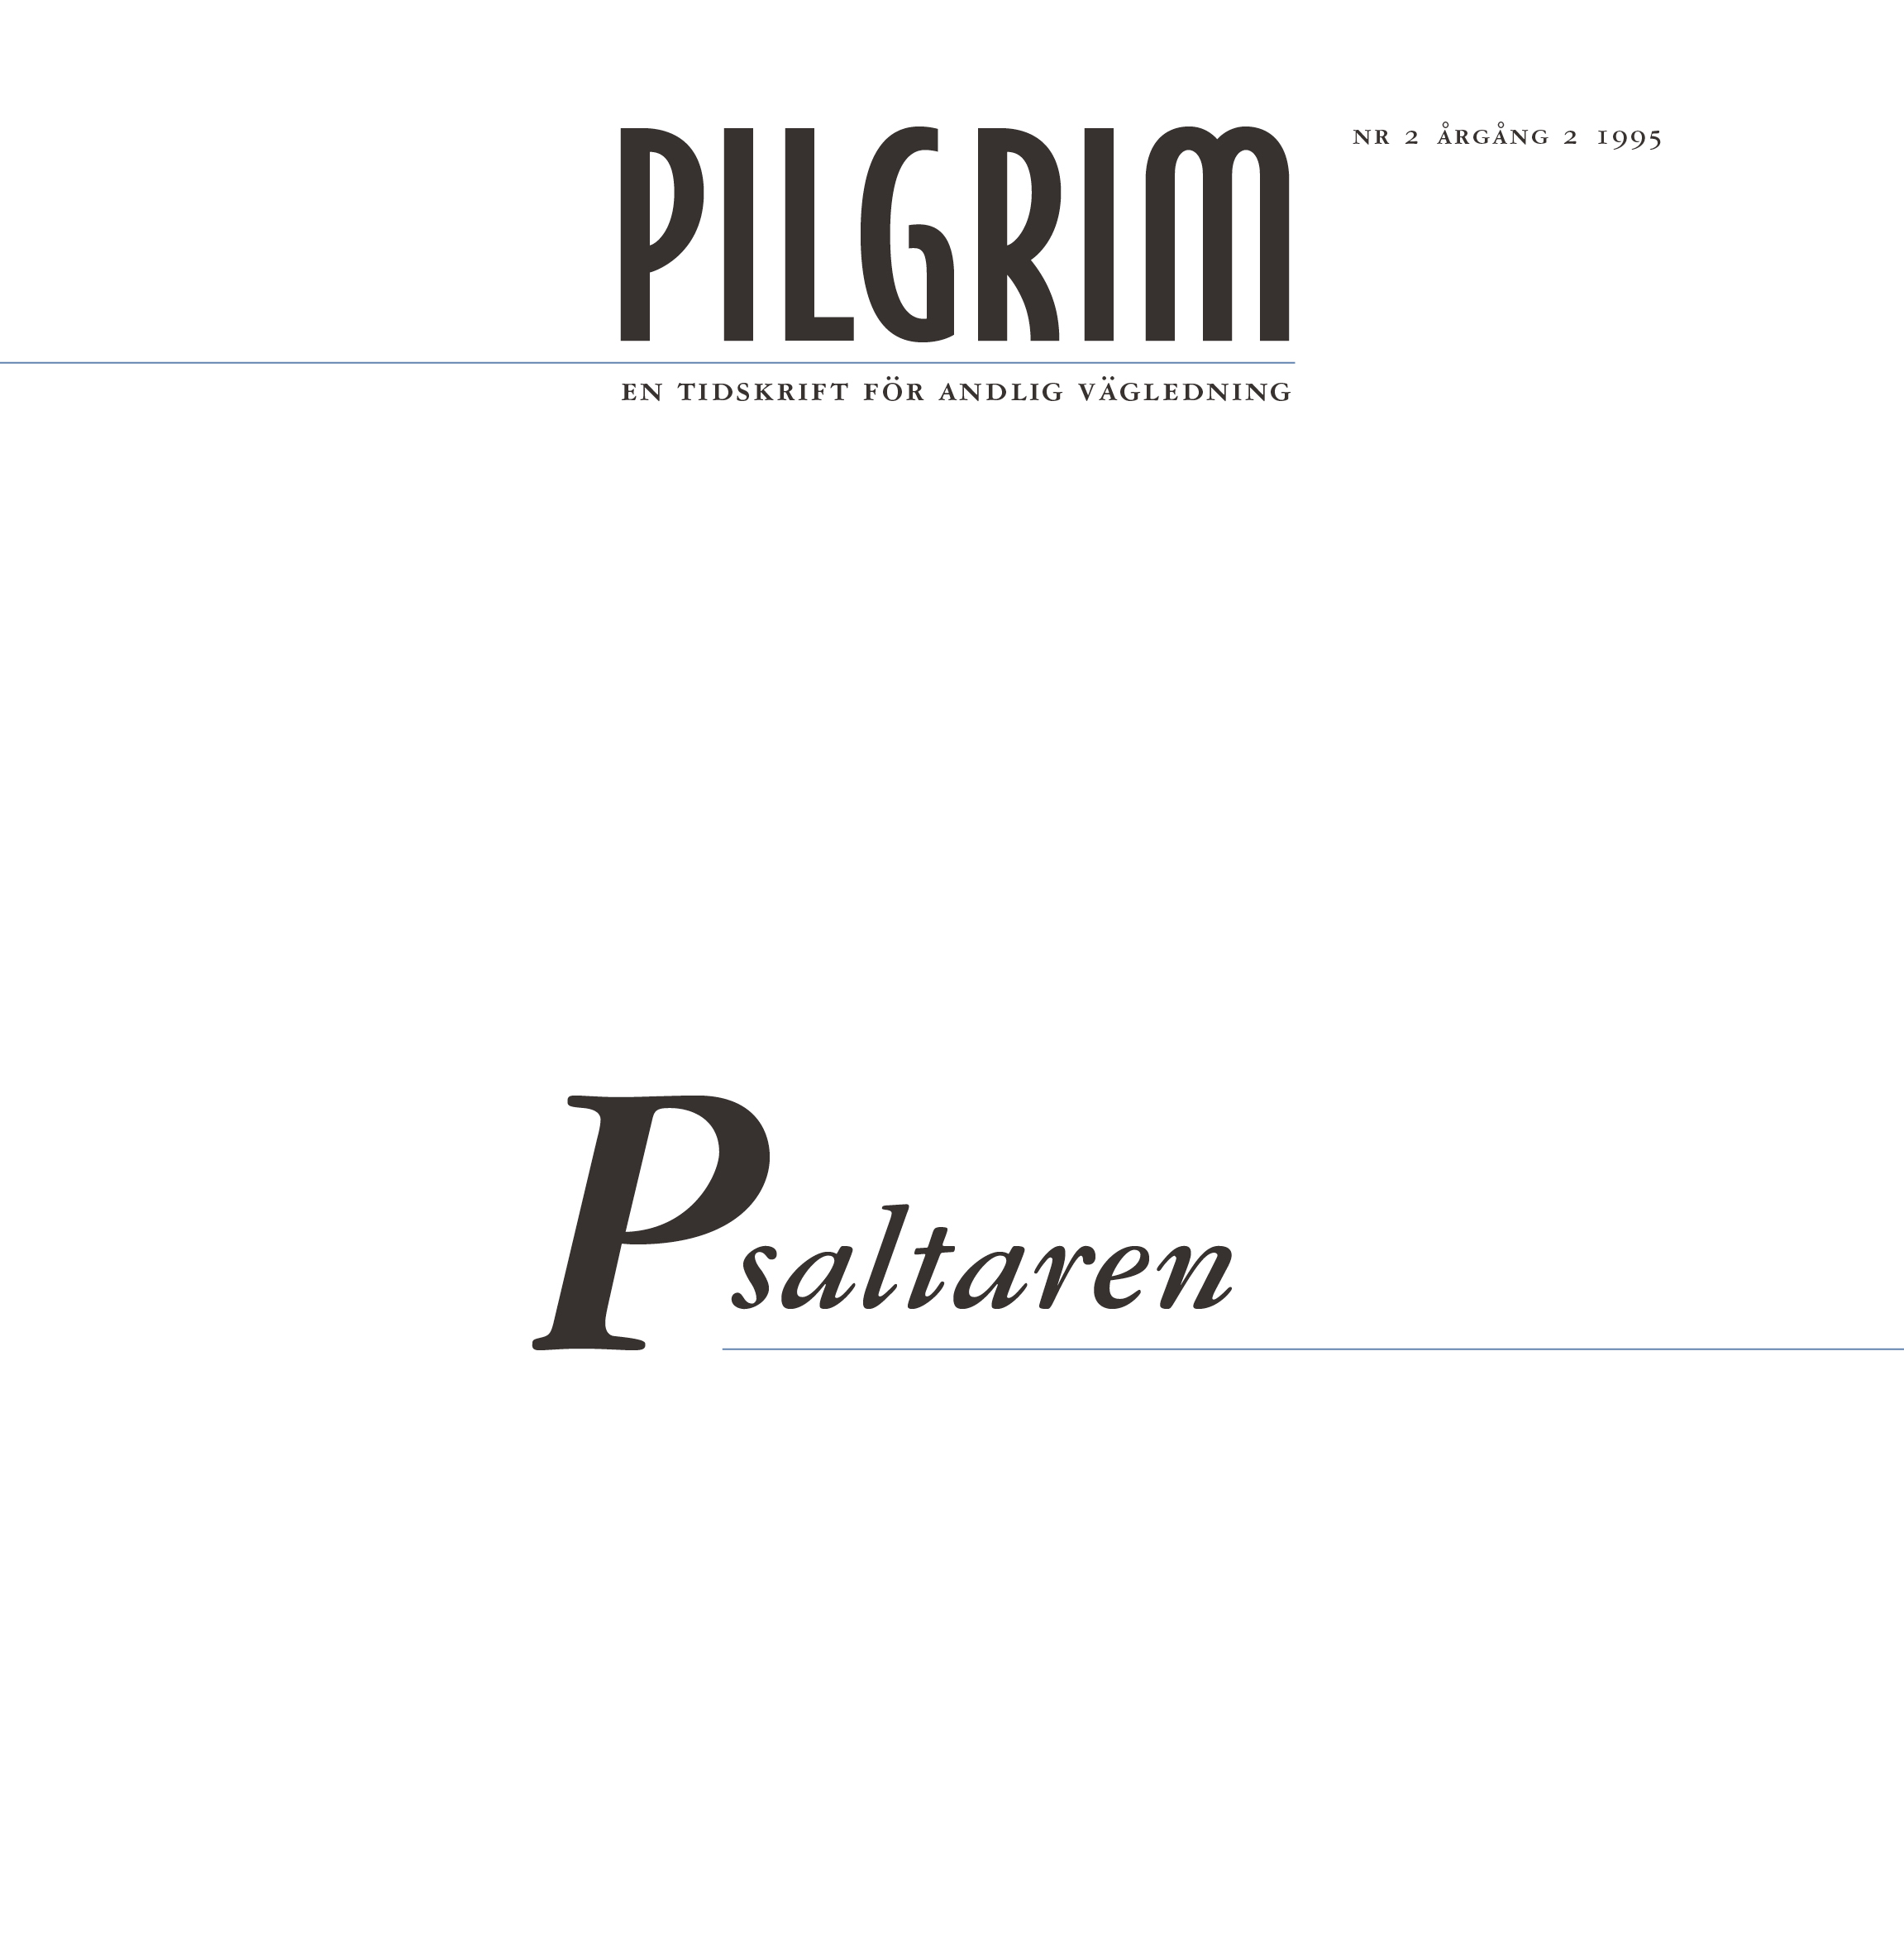 Pilgrim frams 1995-2